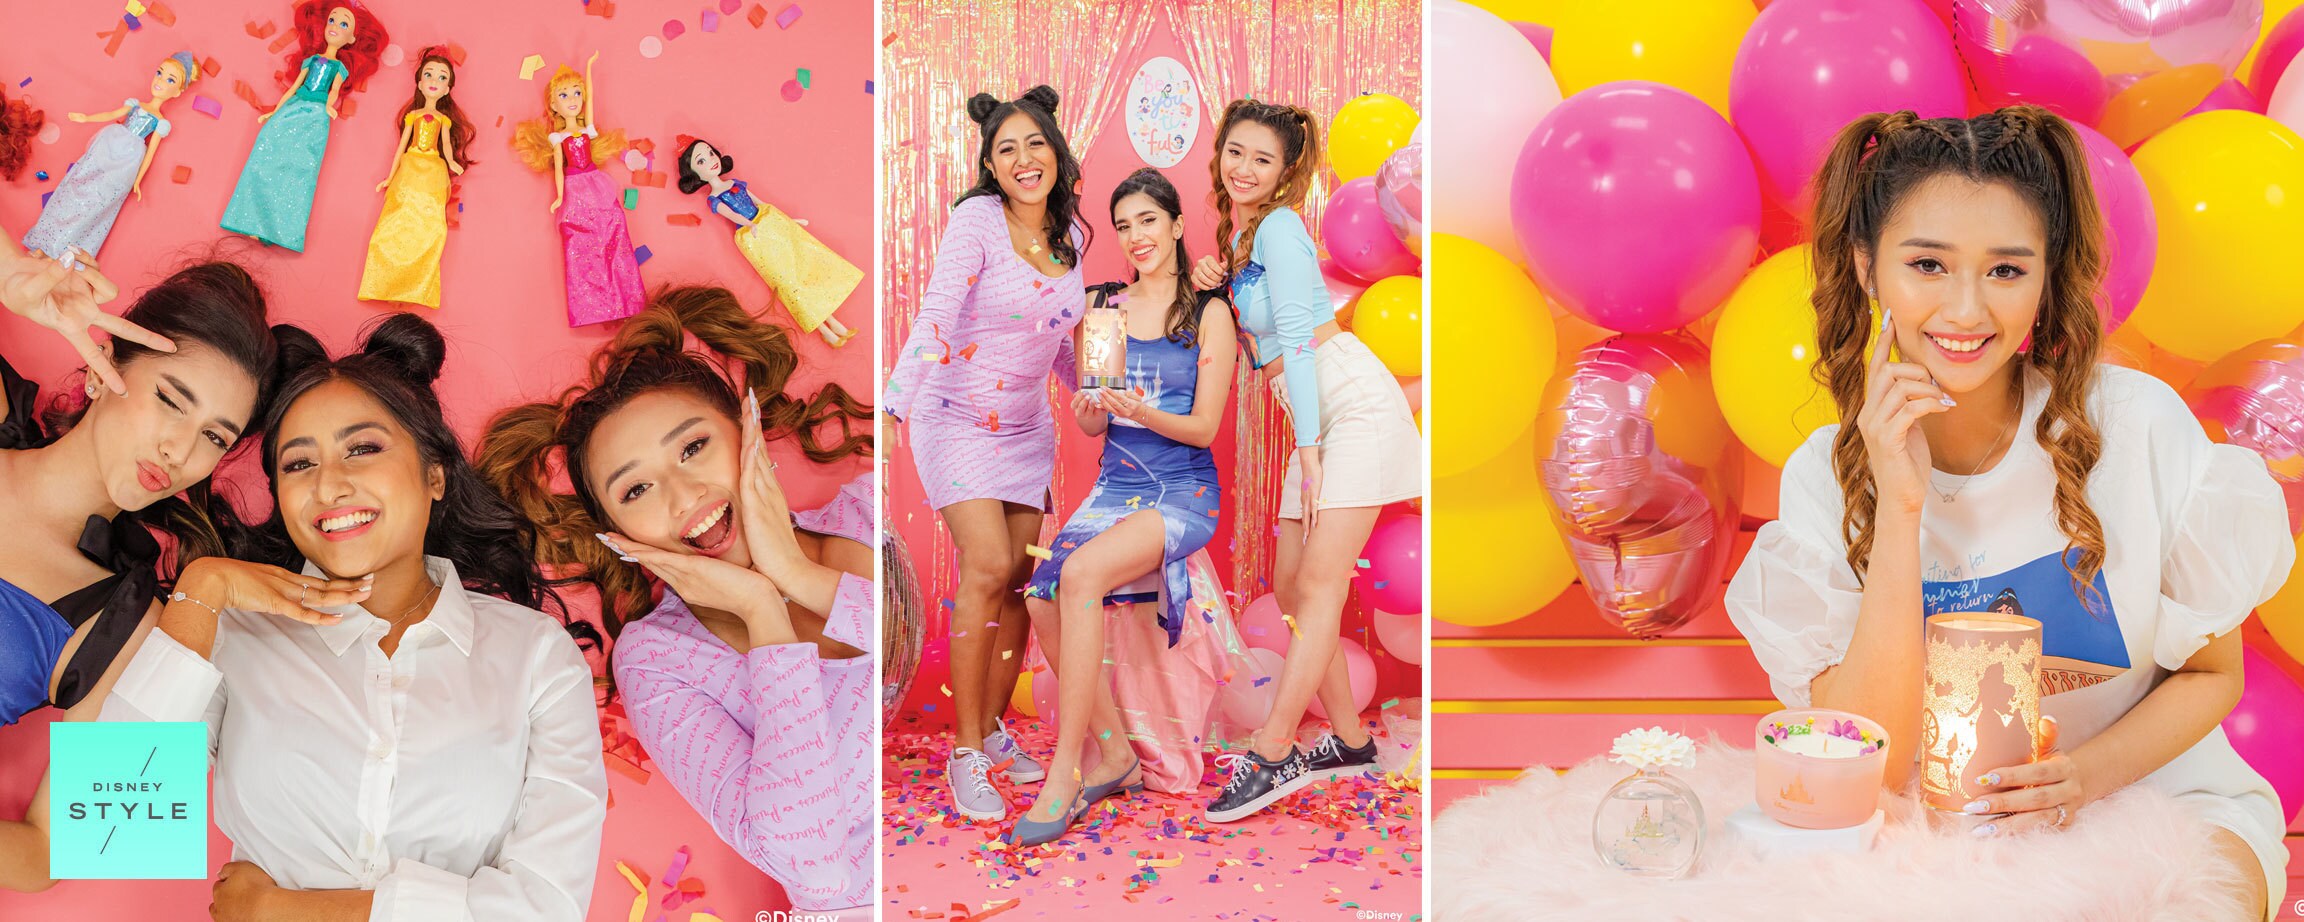 6 Ways to Celebrate Disney’s Ultimate Princess Celebration: We Are One!